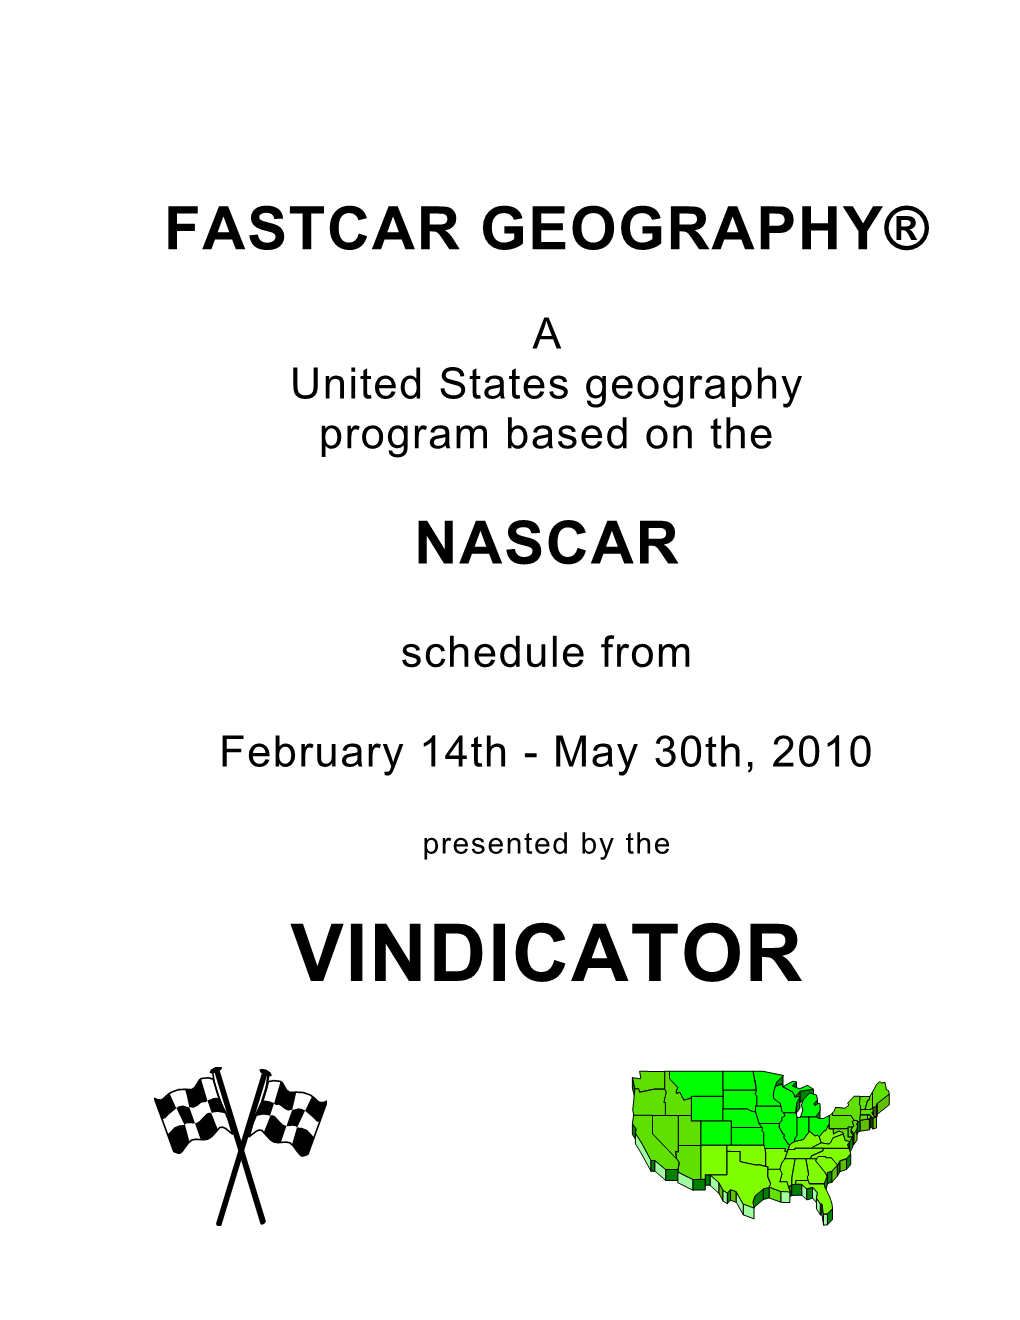 Fastcar Geography